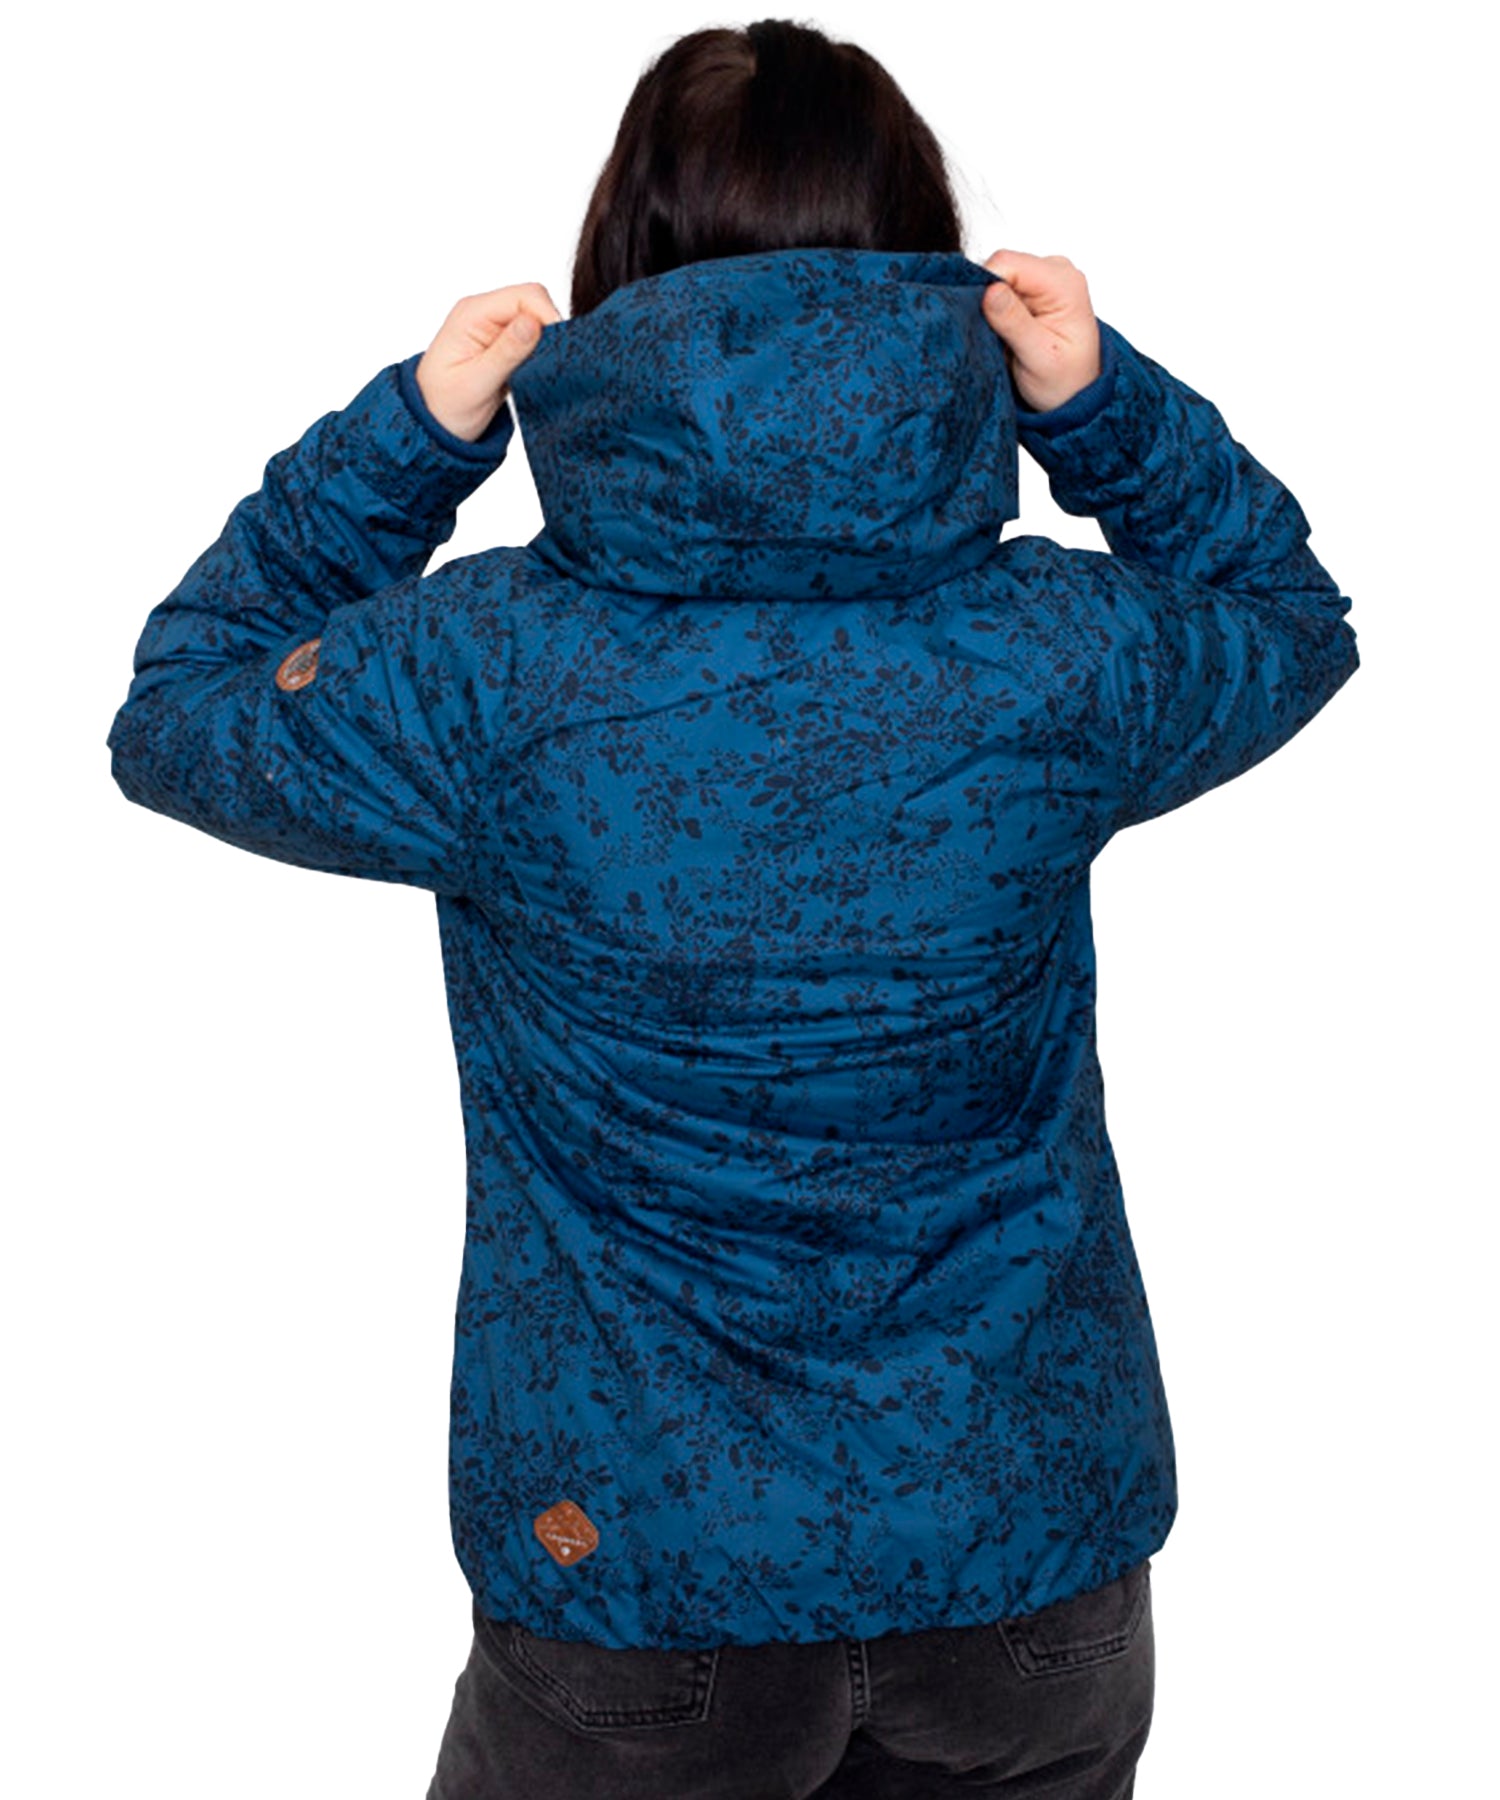 ragwear-chaqueta-dizzie-print-color-azul-estampado-floral-impermeable-calidad-Ragwear-producto-vegano